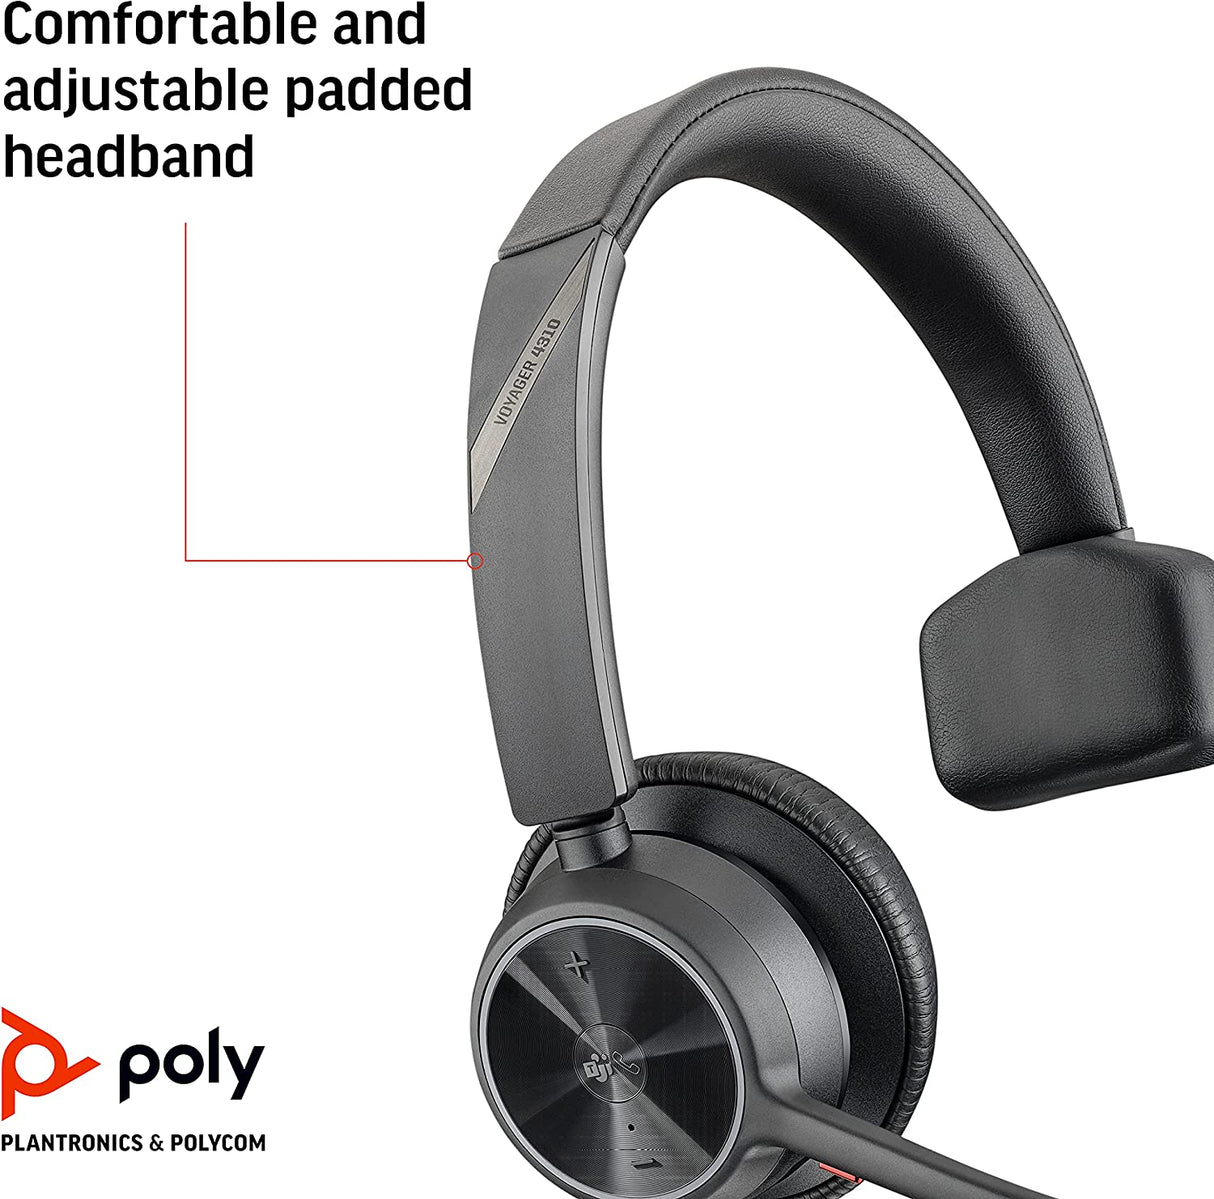 Poly (Plantronics + Polycom) Voyager 4310 UC Wireless Headset (Plantronics)-Single-Ear Headset w/Mic-Connect to PC/Mac via USB-A Bluetooth Adapter,Cell Phone via Bluetooth,Black,218470-02 USB-A Headset (Teams Version)